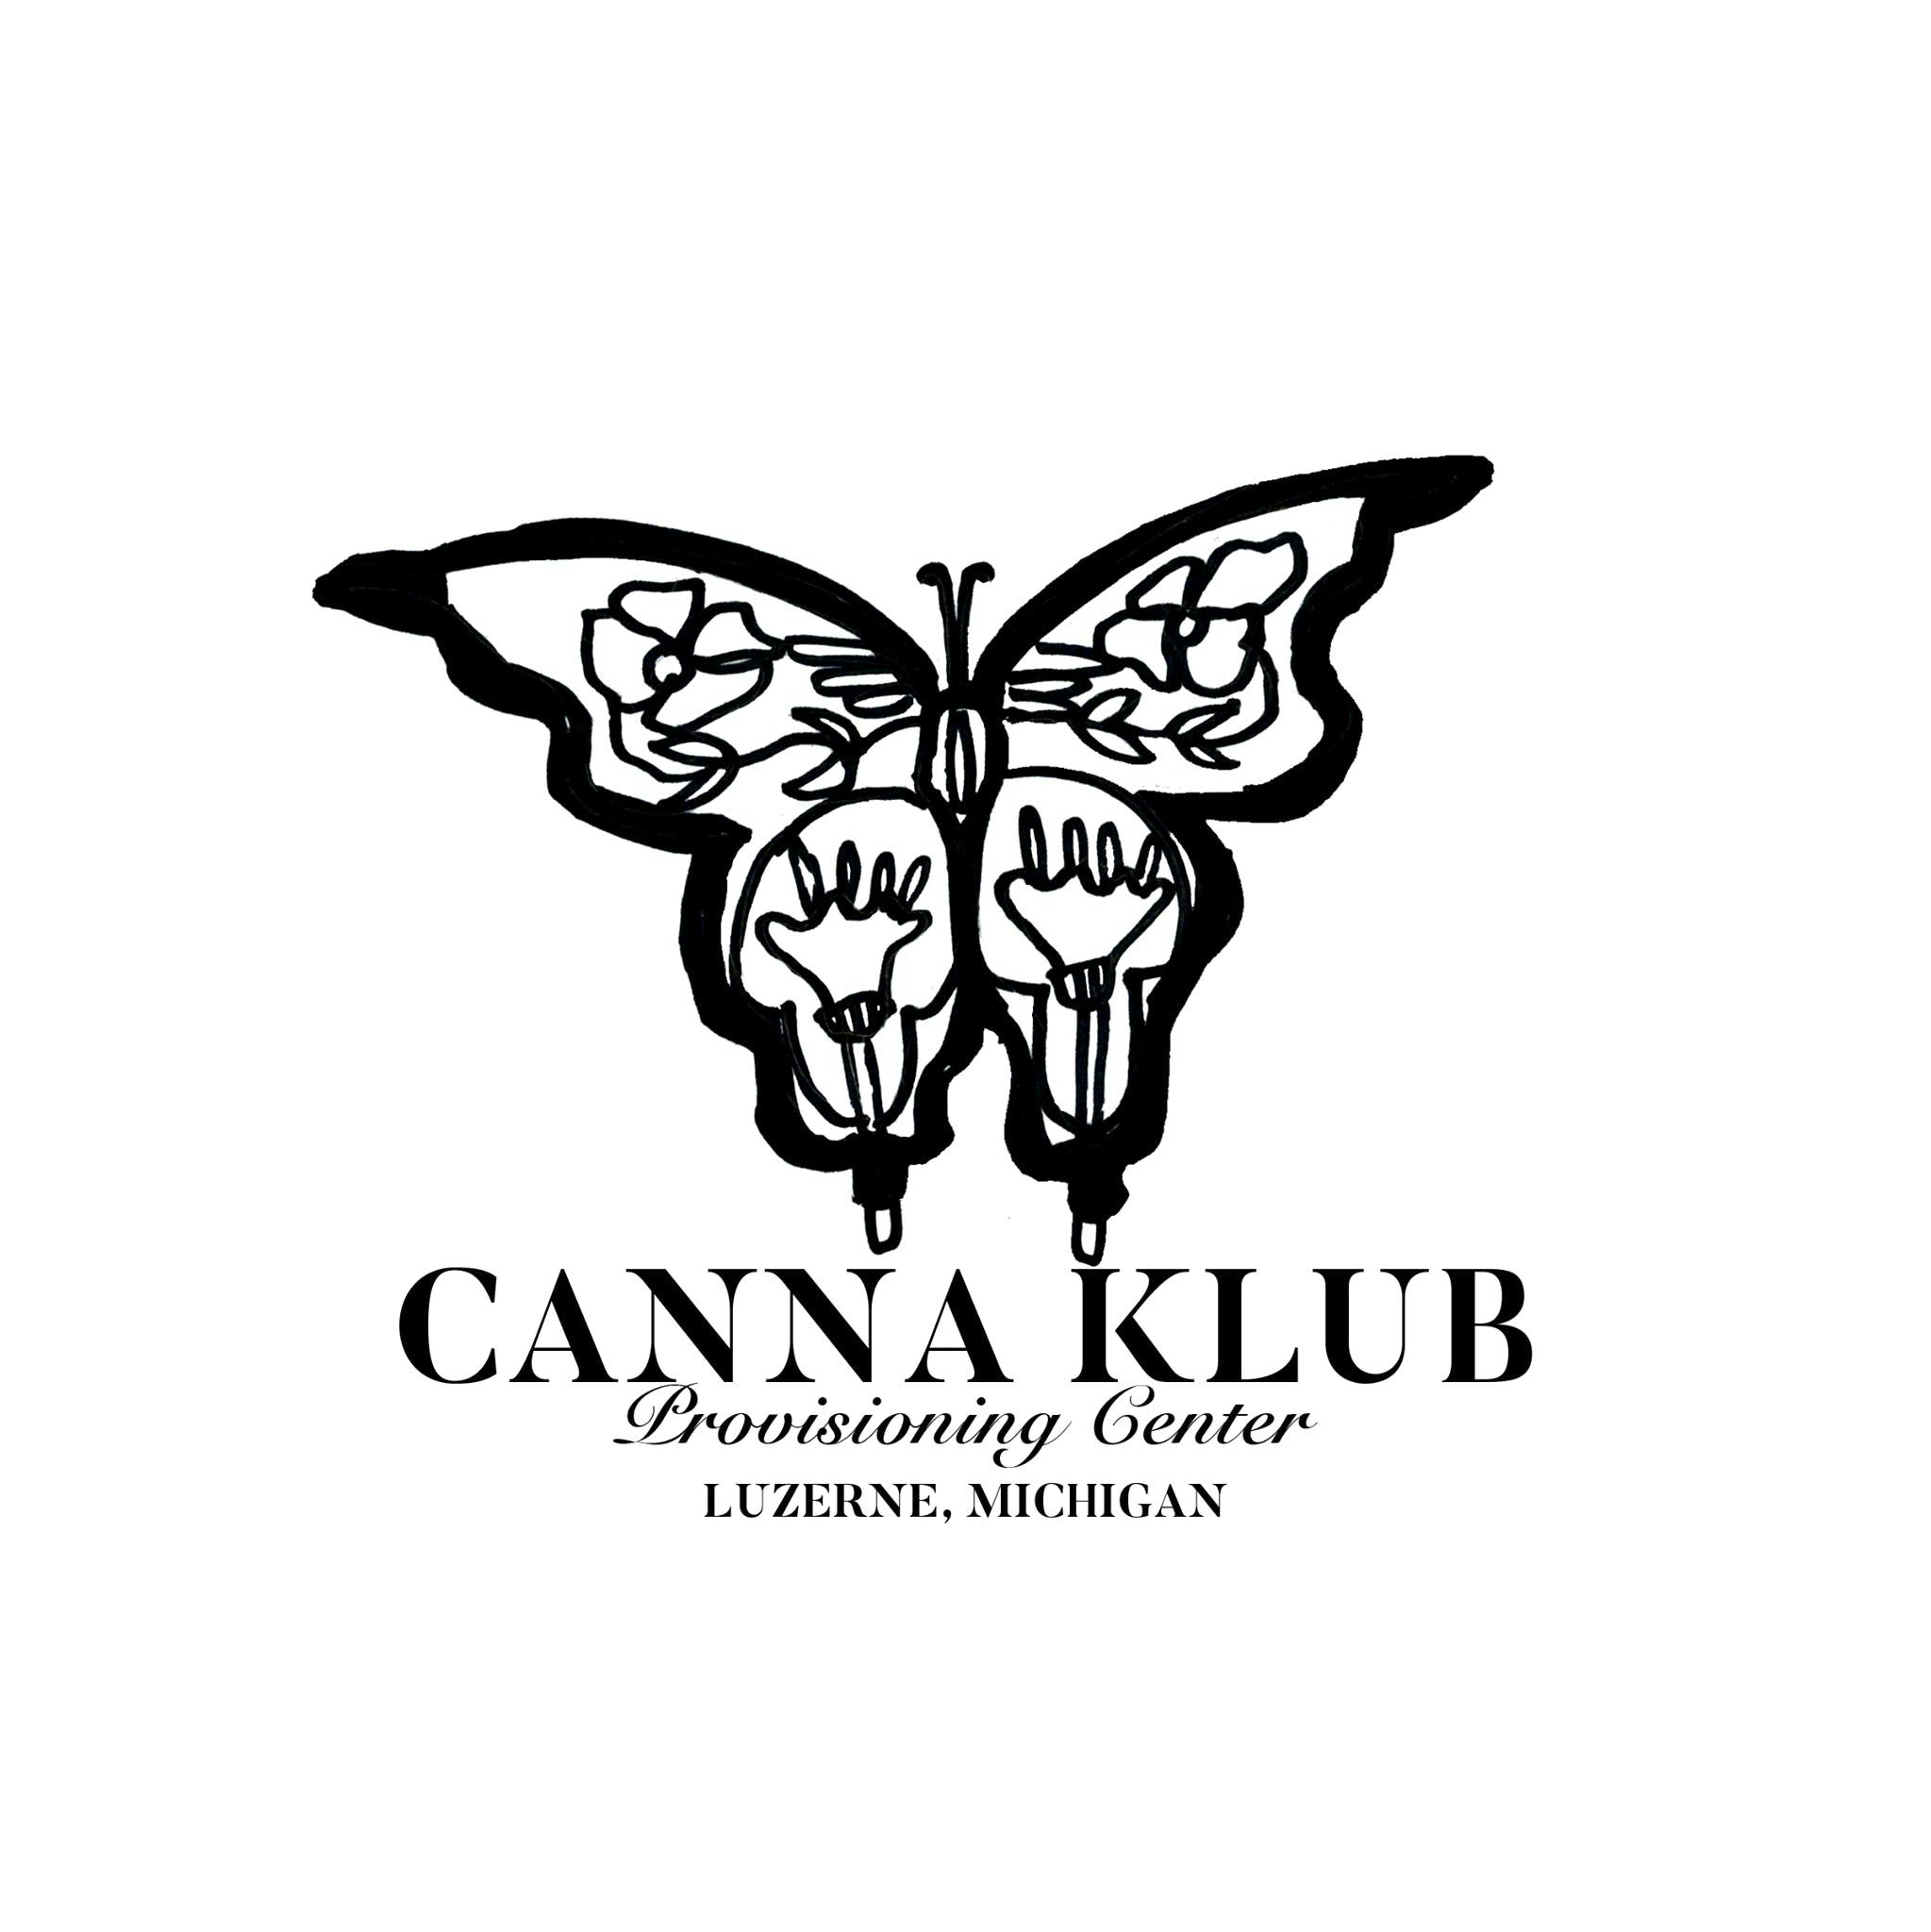 Canna Klub Provisioning Center